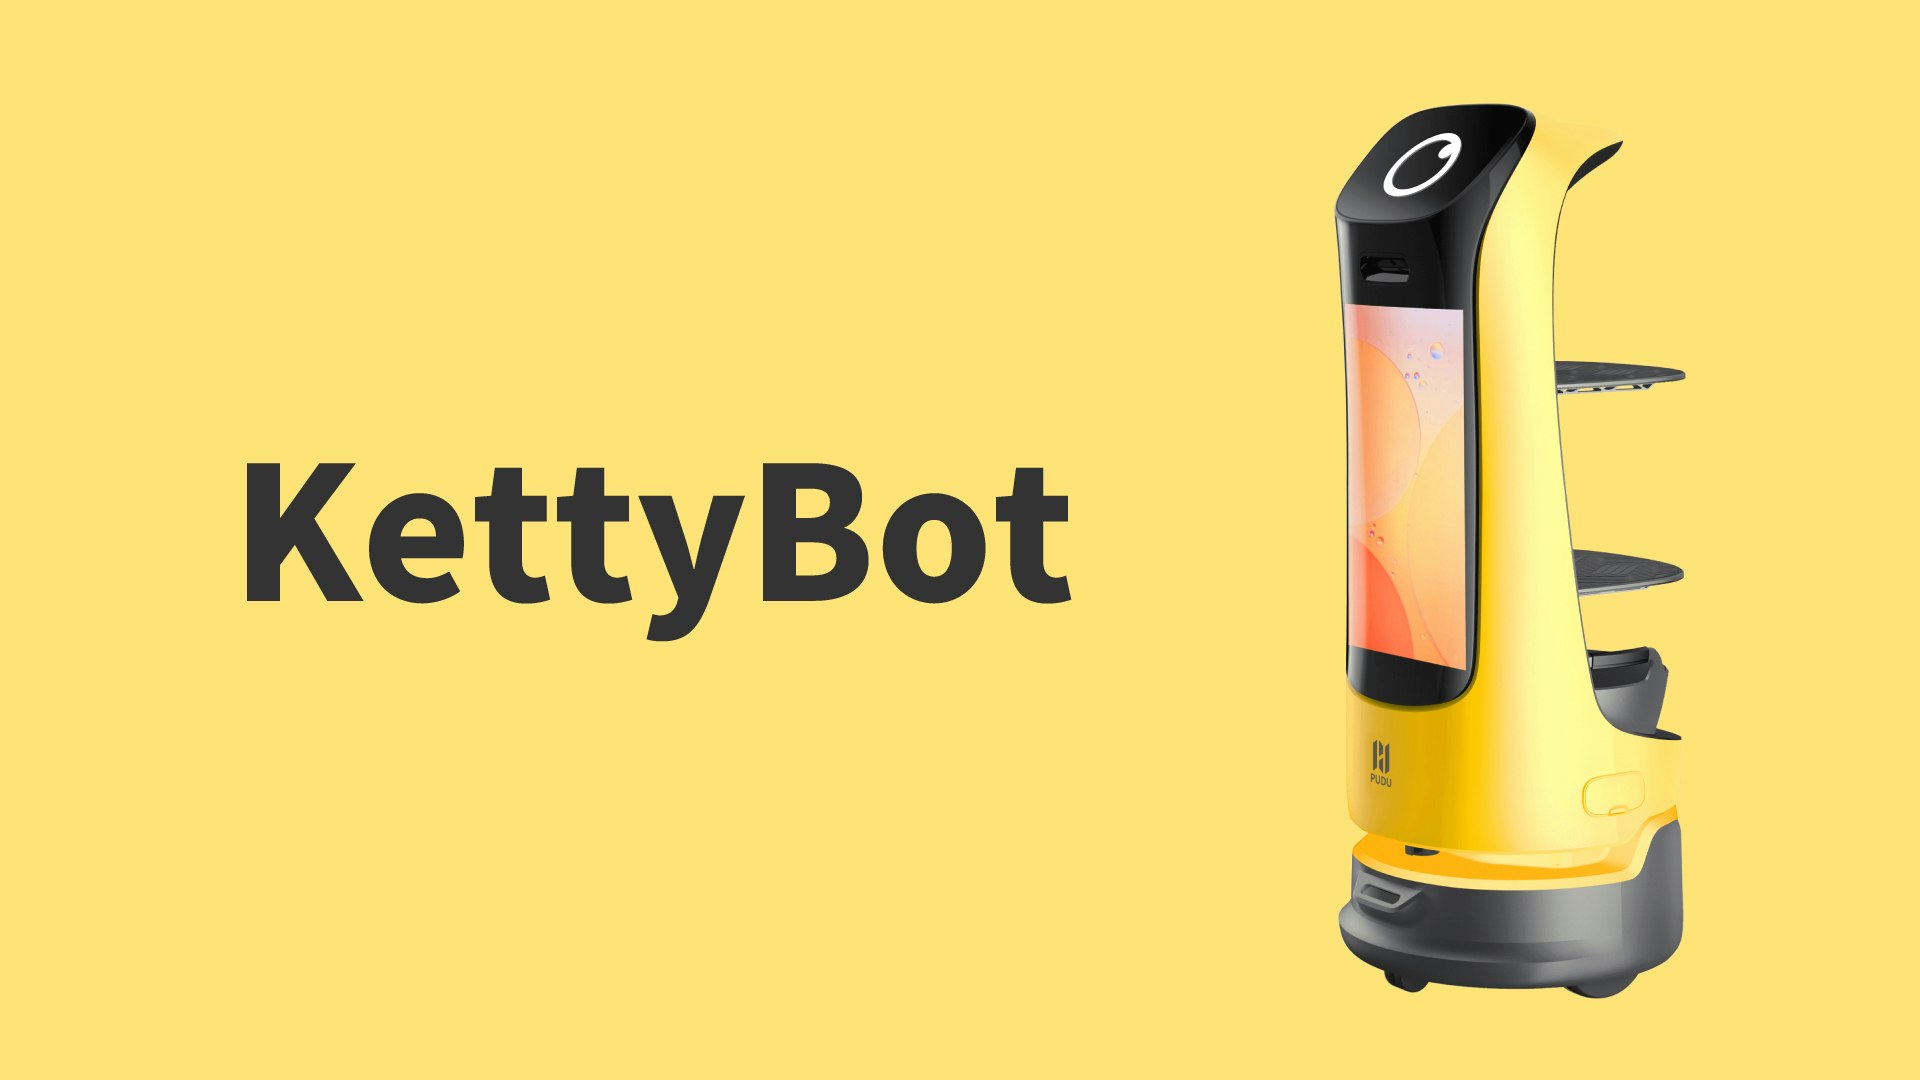 55cmの道幅もスイスイ！
配膳ロボット「KettyBot」のキービジュアル